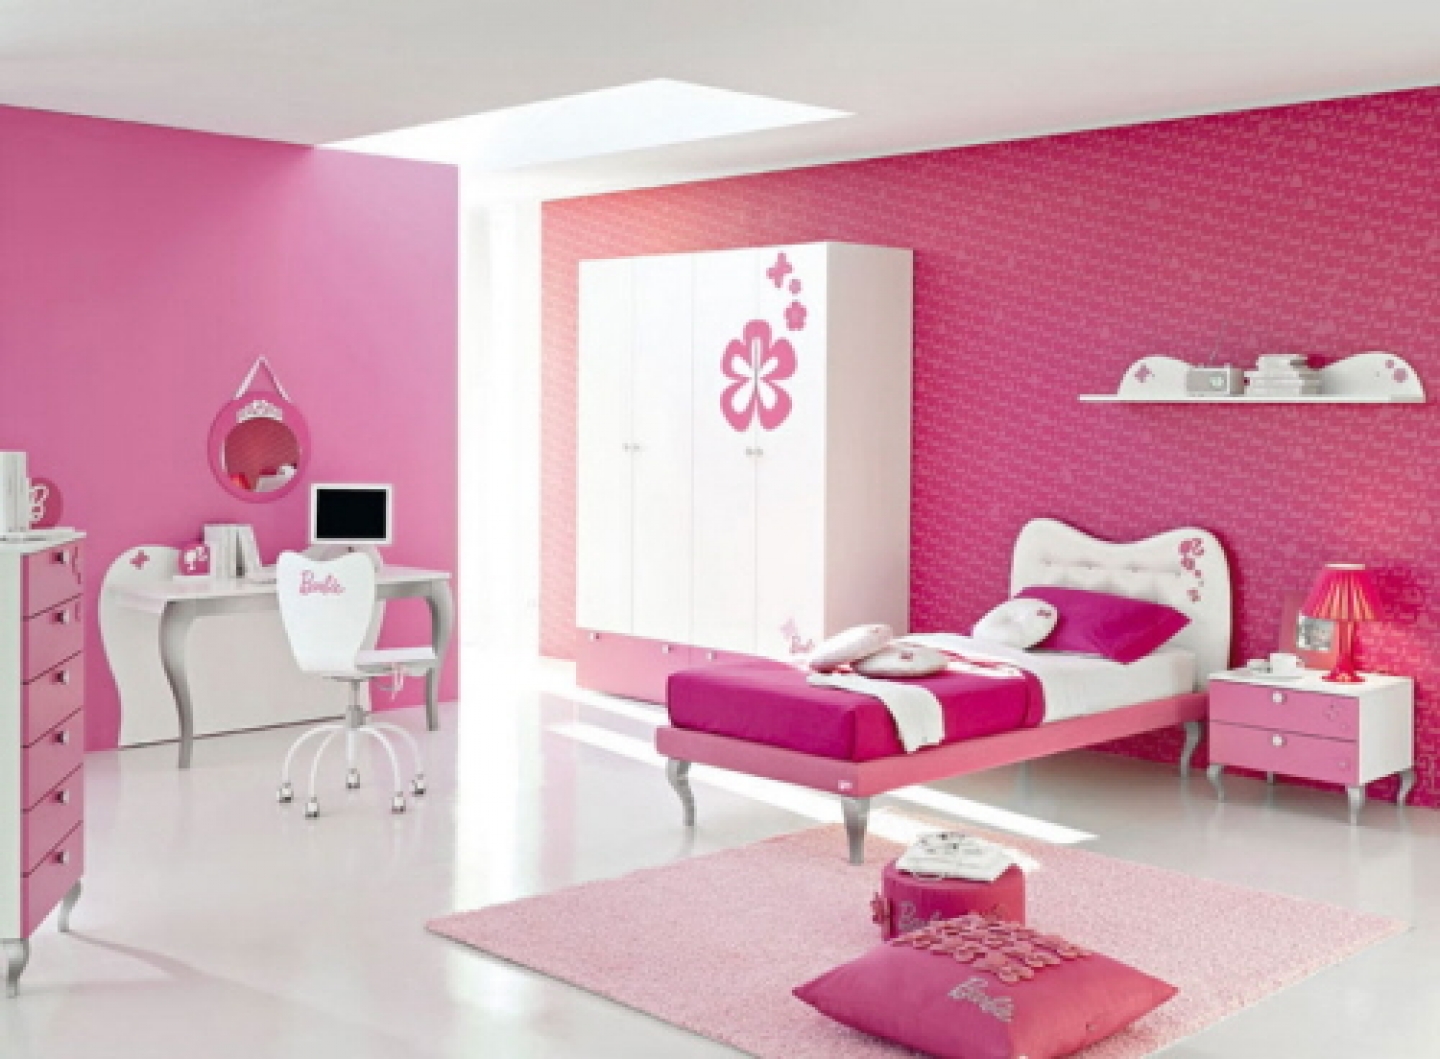 Tags Bed Bedroom Design Designs For Girls